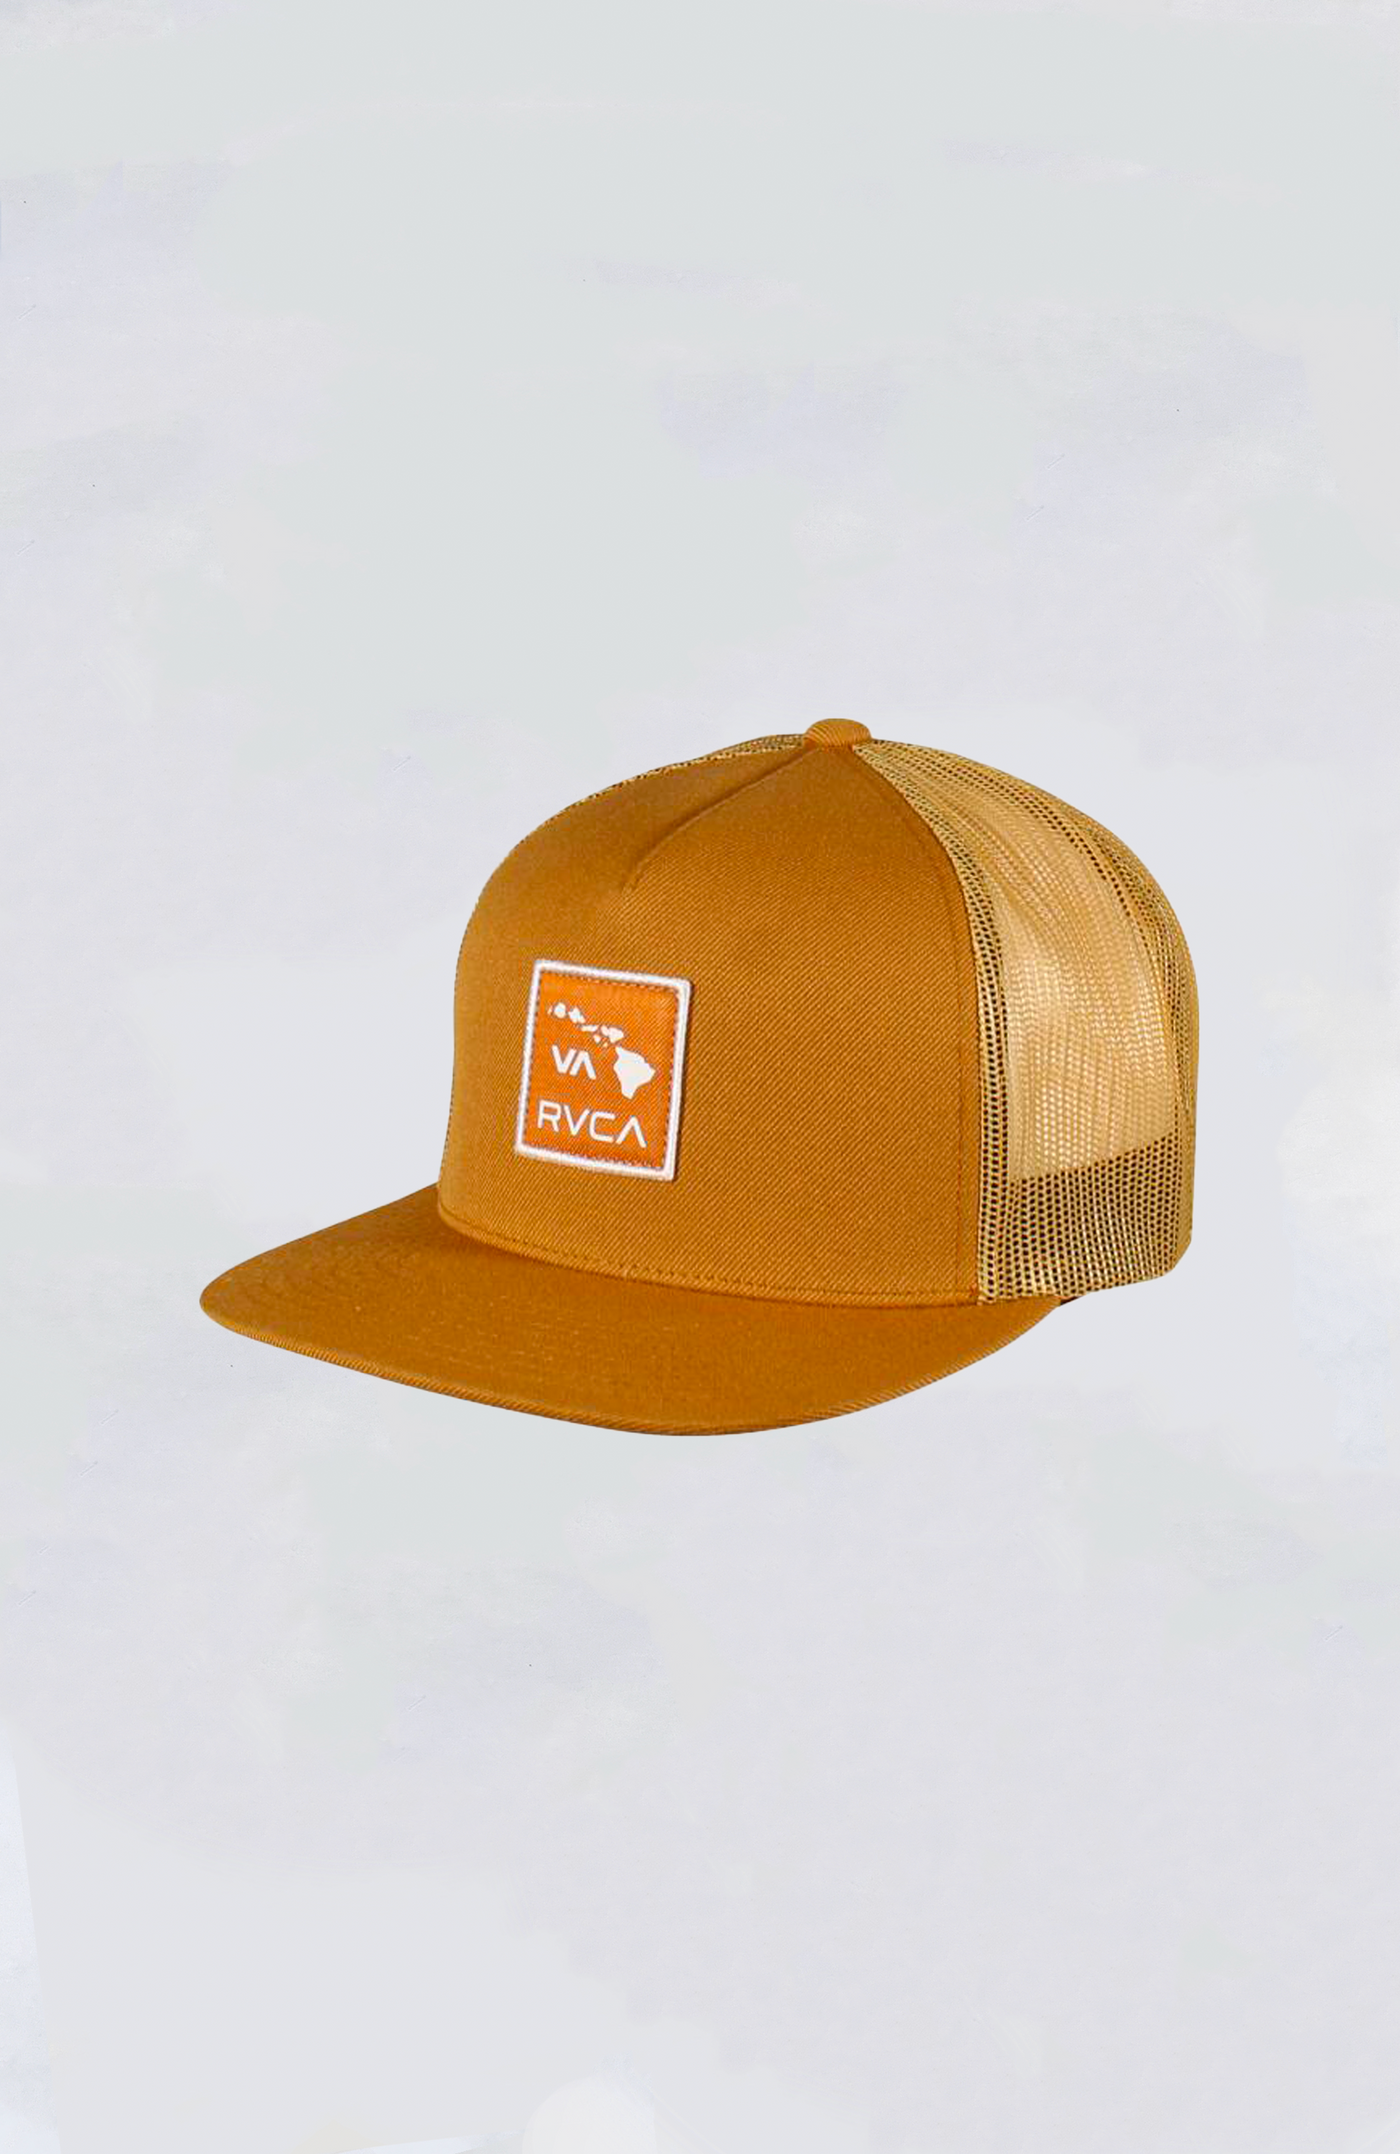 RVCA - Islands Patch Trucker Hat